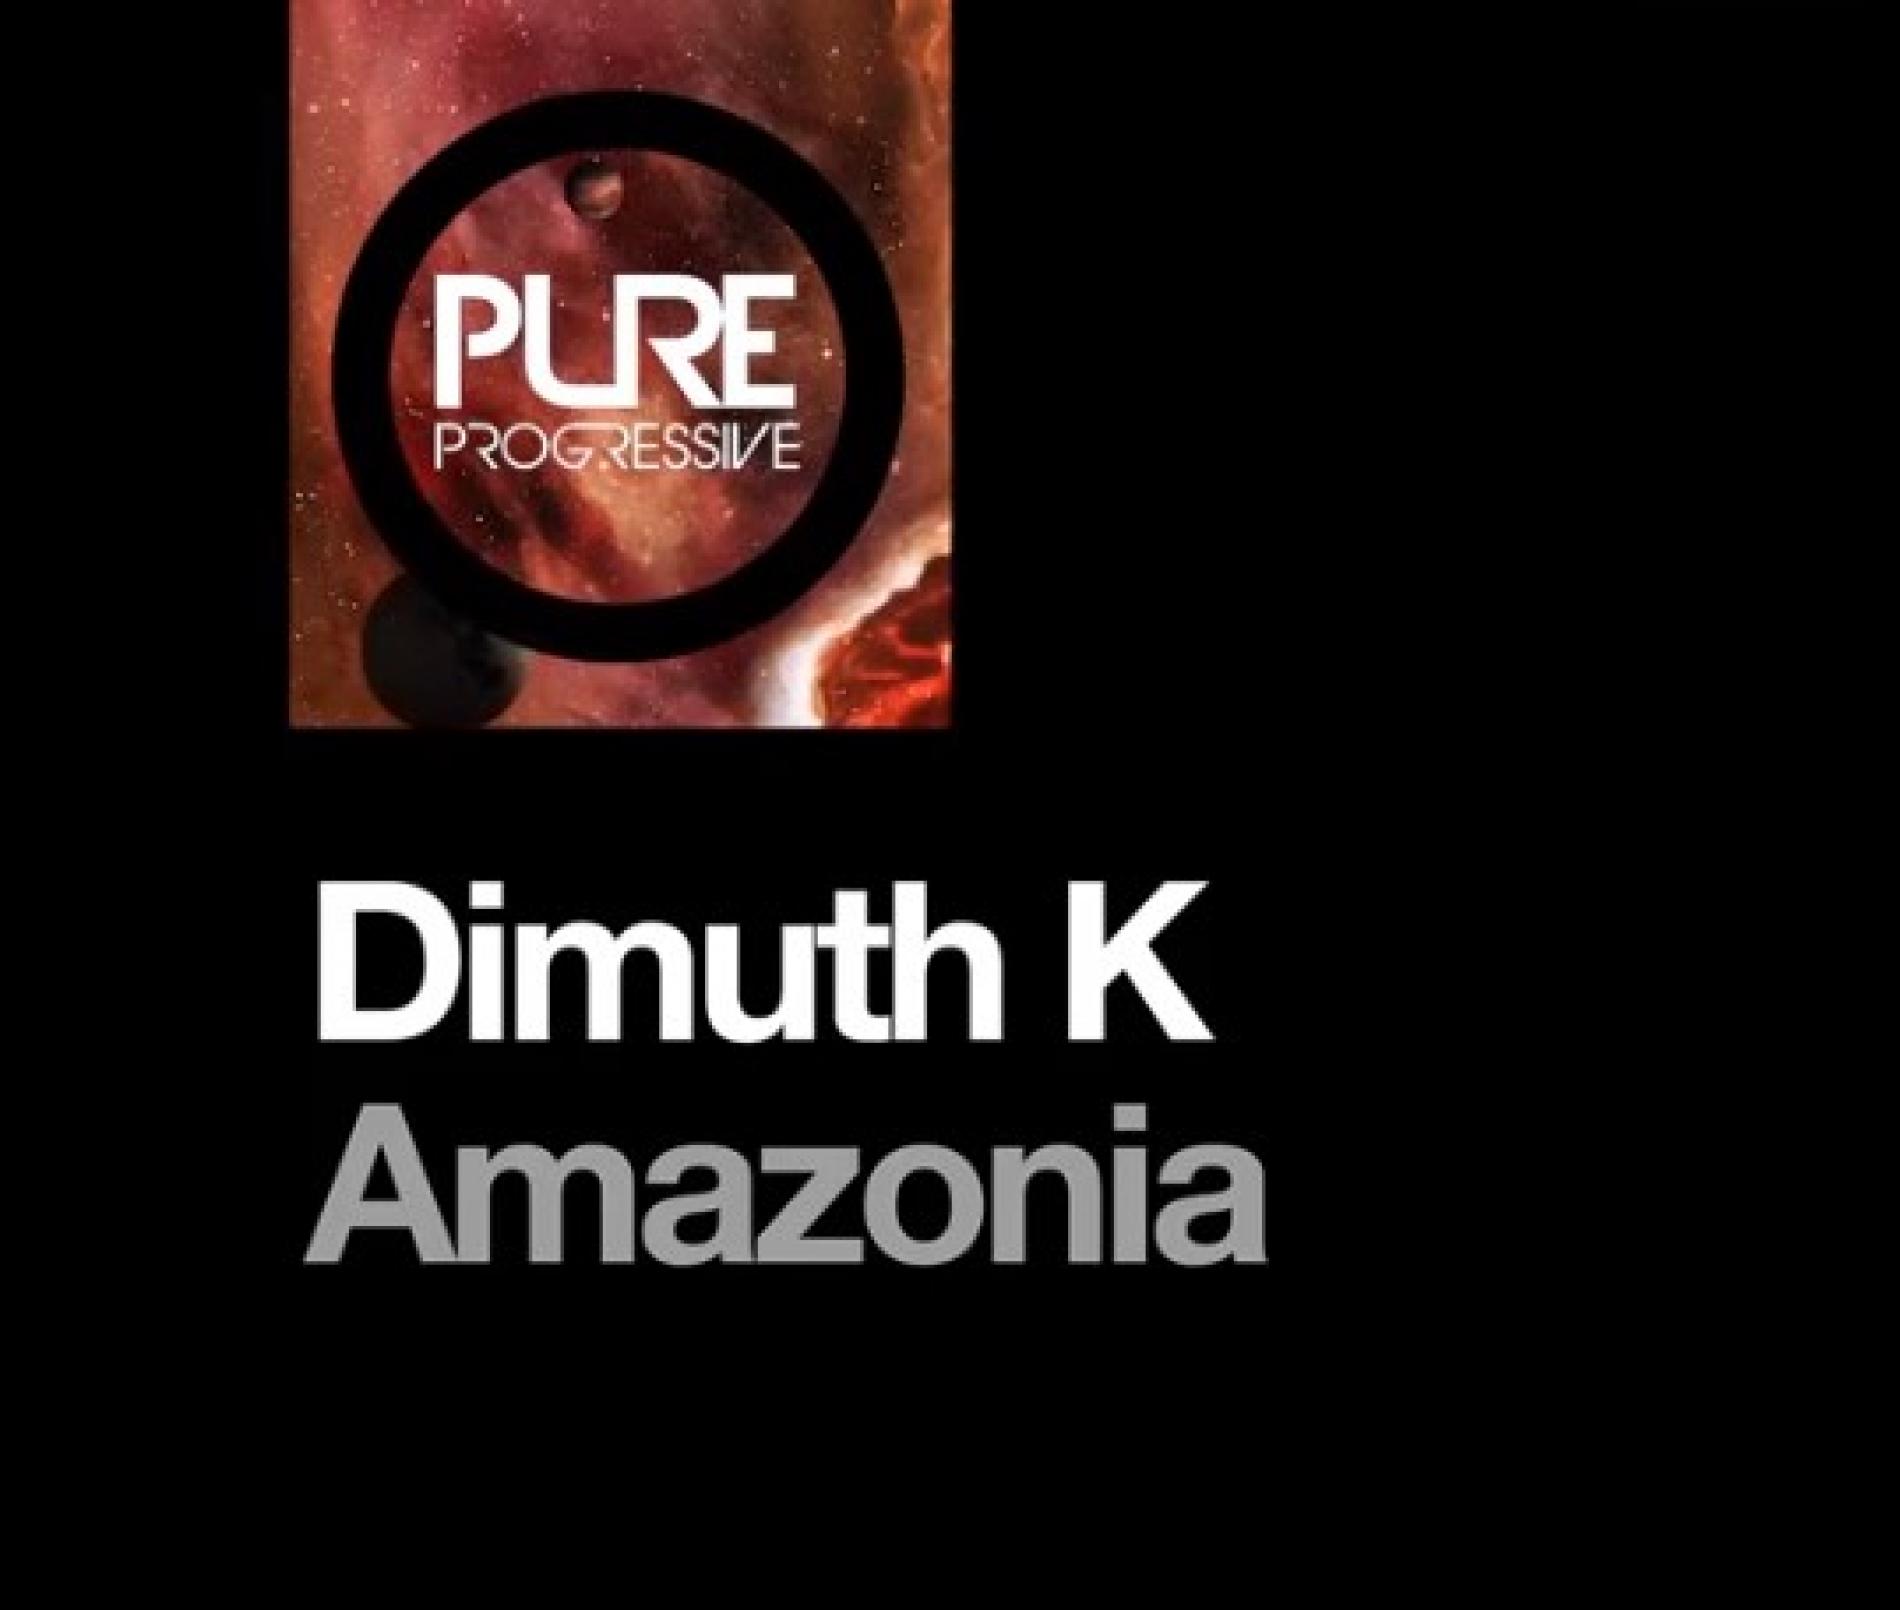 New Music : Dimuth K – Amazonia